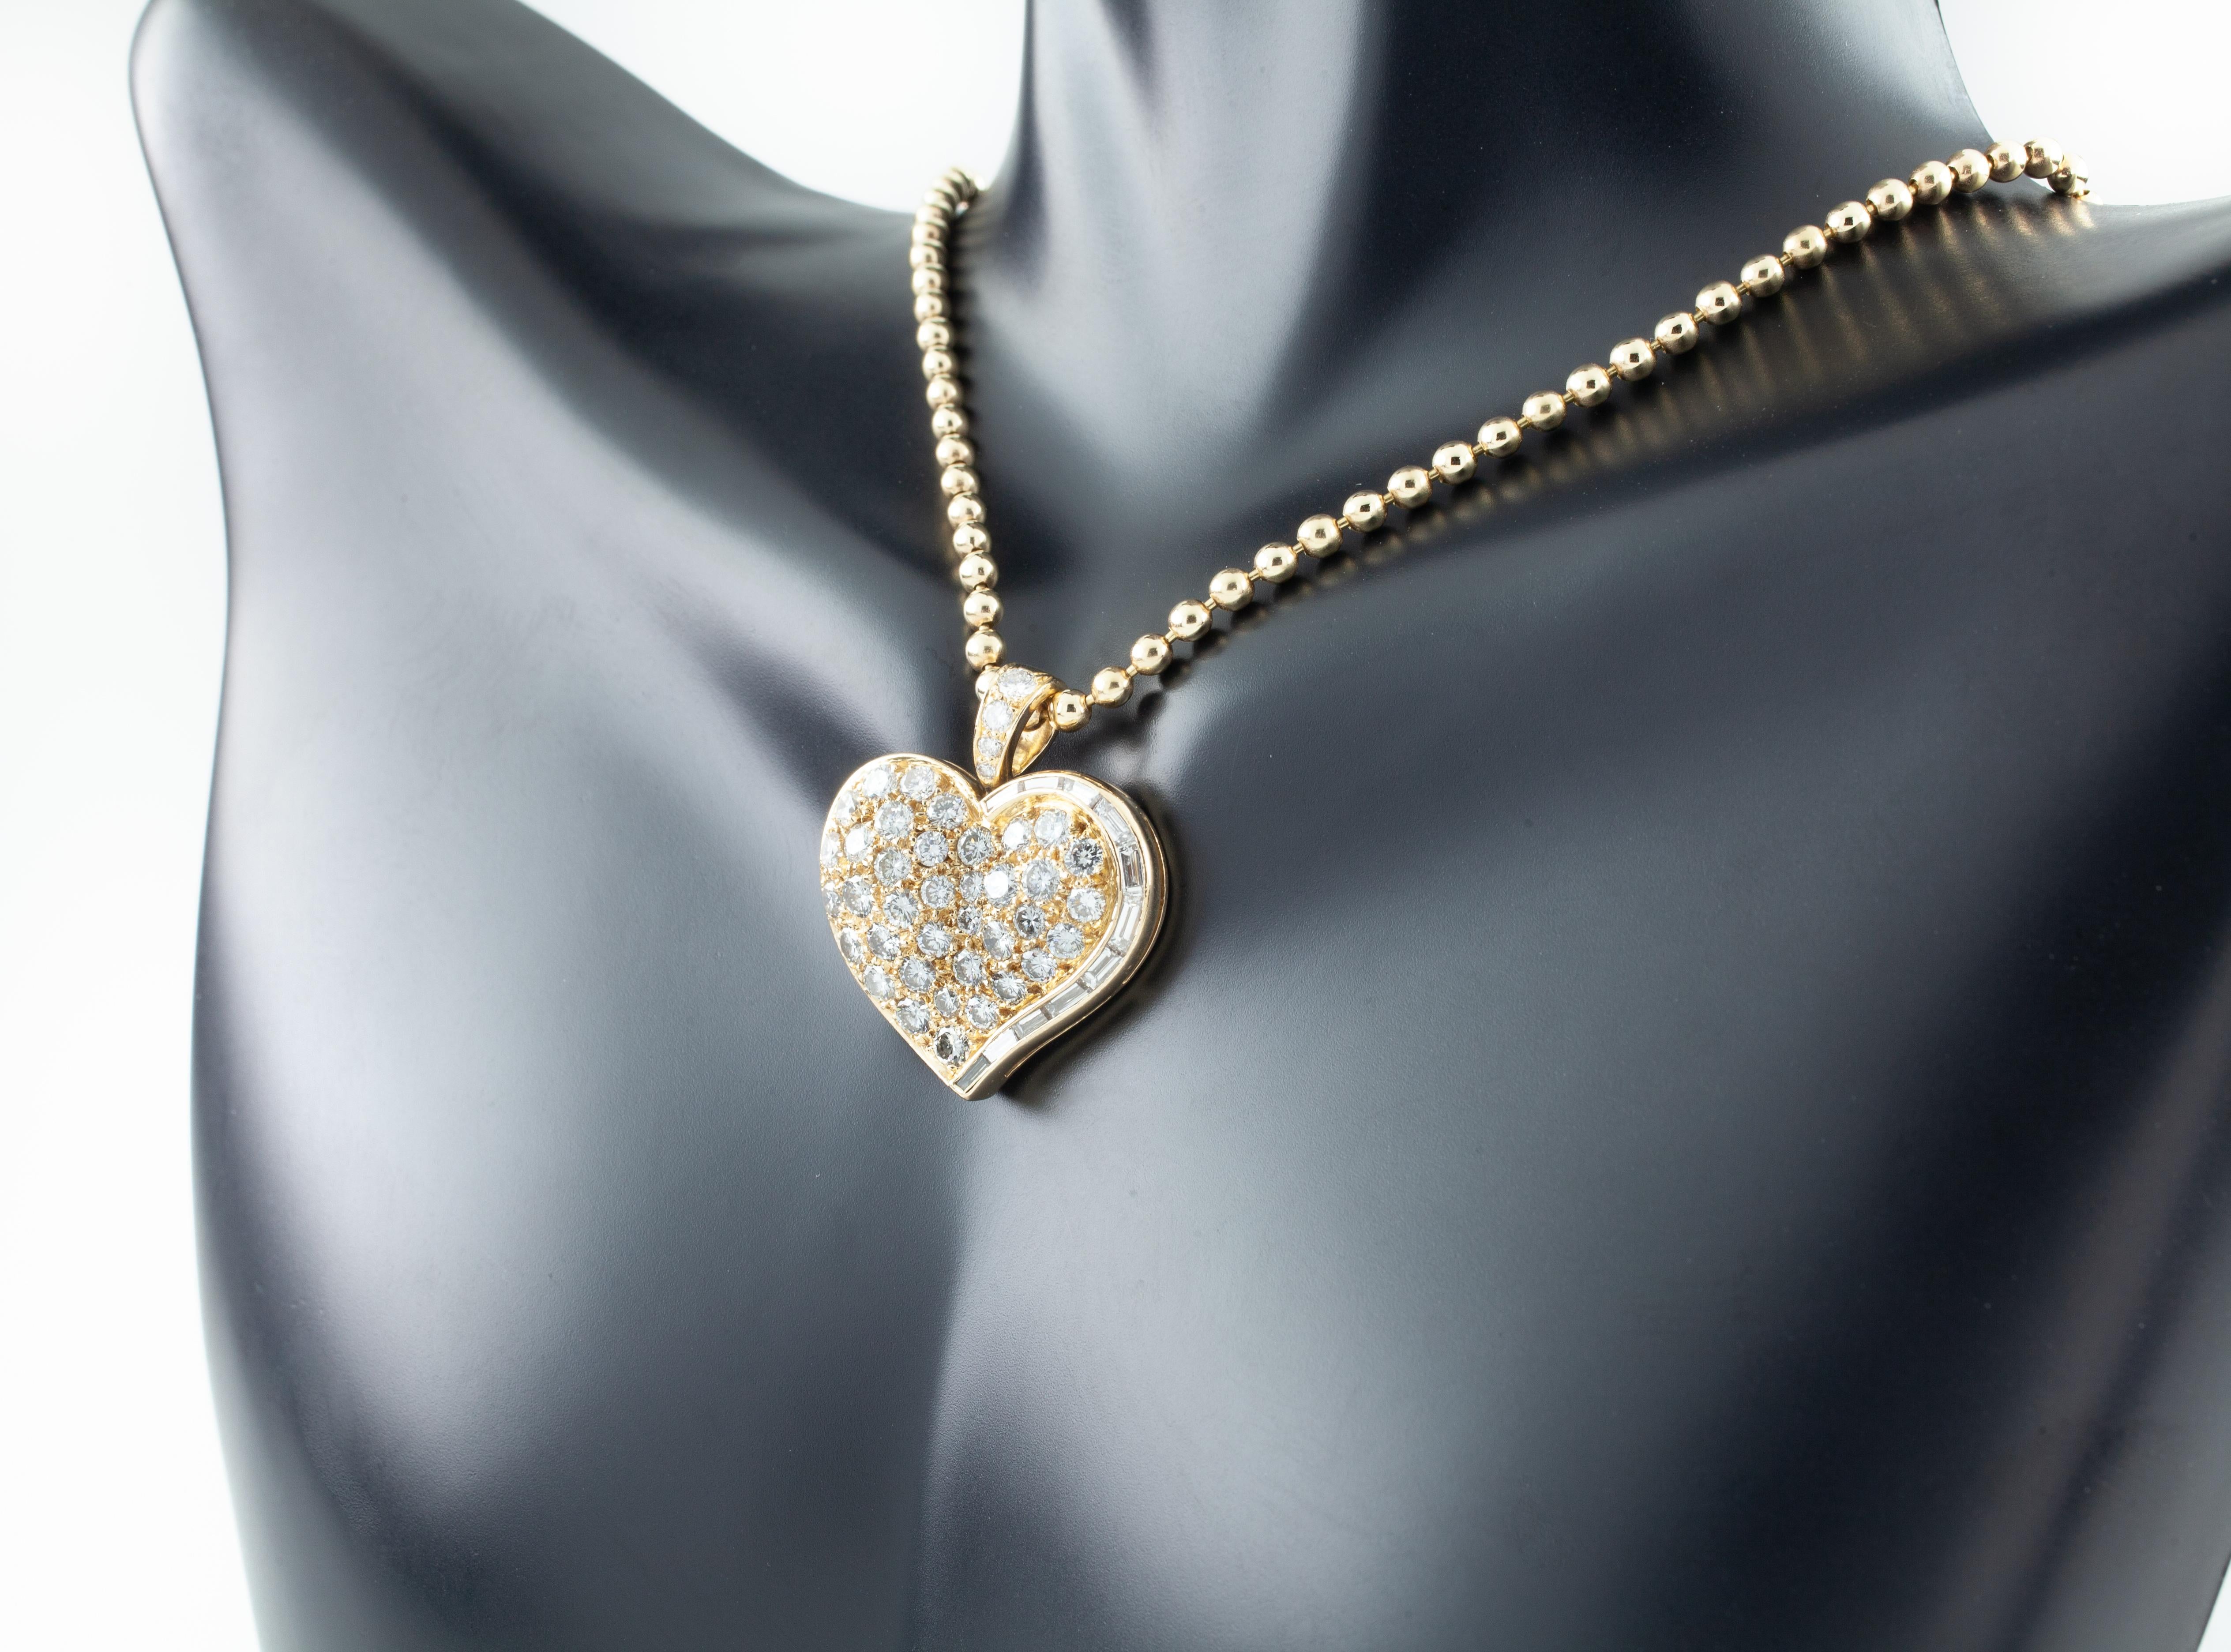 Gorgeous Vintage Bvlgari Heart Pendant
Features Custom-Set Pave Round Diamonds
Features Custom-Cut Channel-Set Baguette Cut Diamonds
Approximately Dimensions of Heart = 23 mm Wide x 18 mm Long (26 mm including bail)
Includes 15